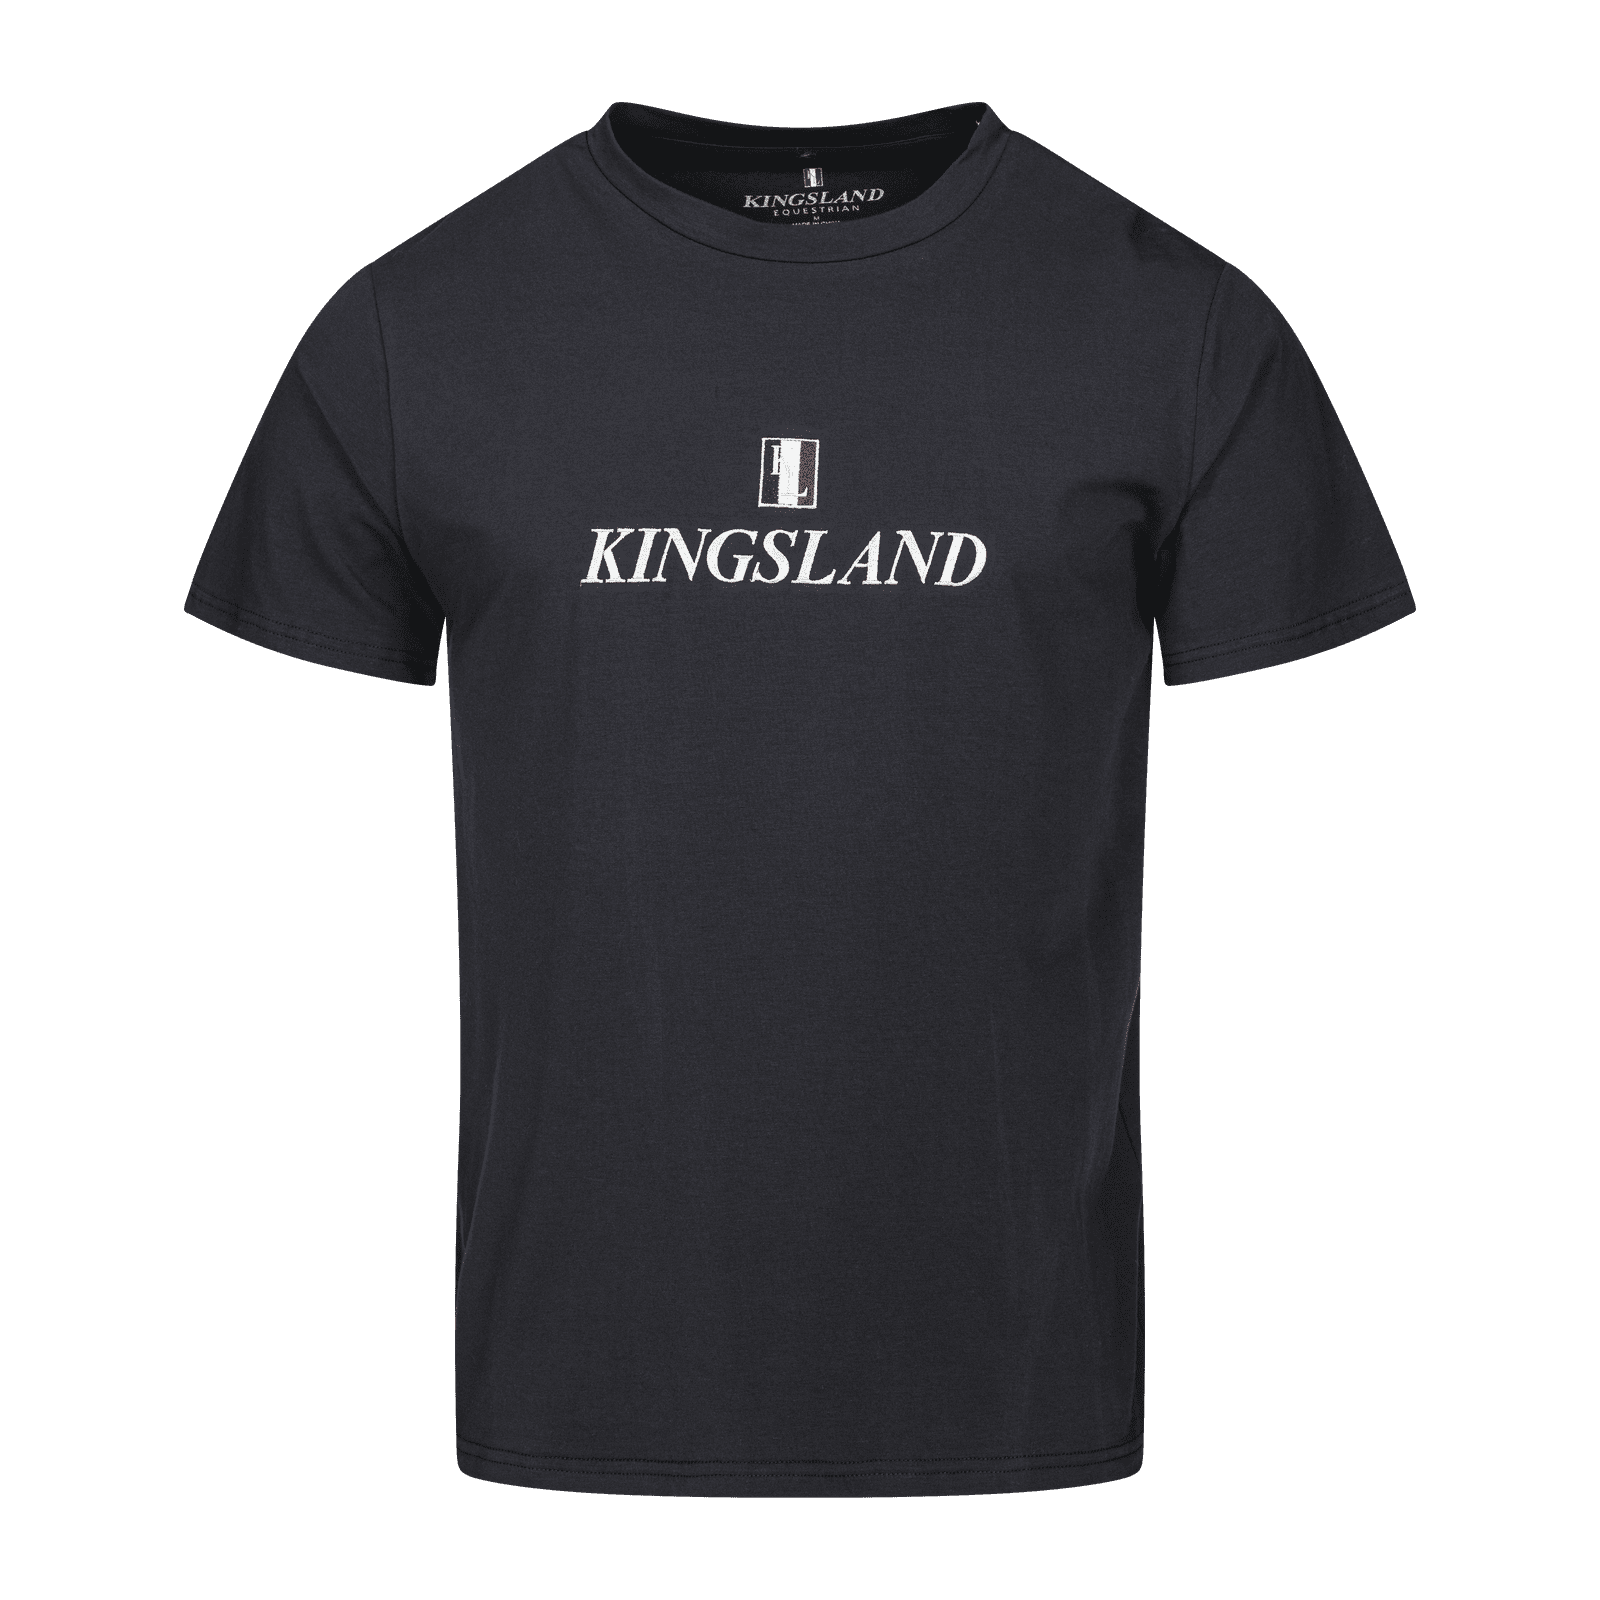 Kingsland Classic Herren-T-Shirt bei SP-Reitsport Kingsland bei SP-Reitsport